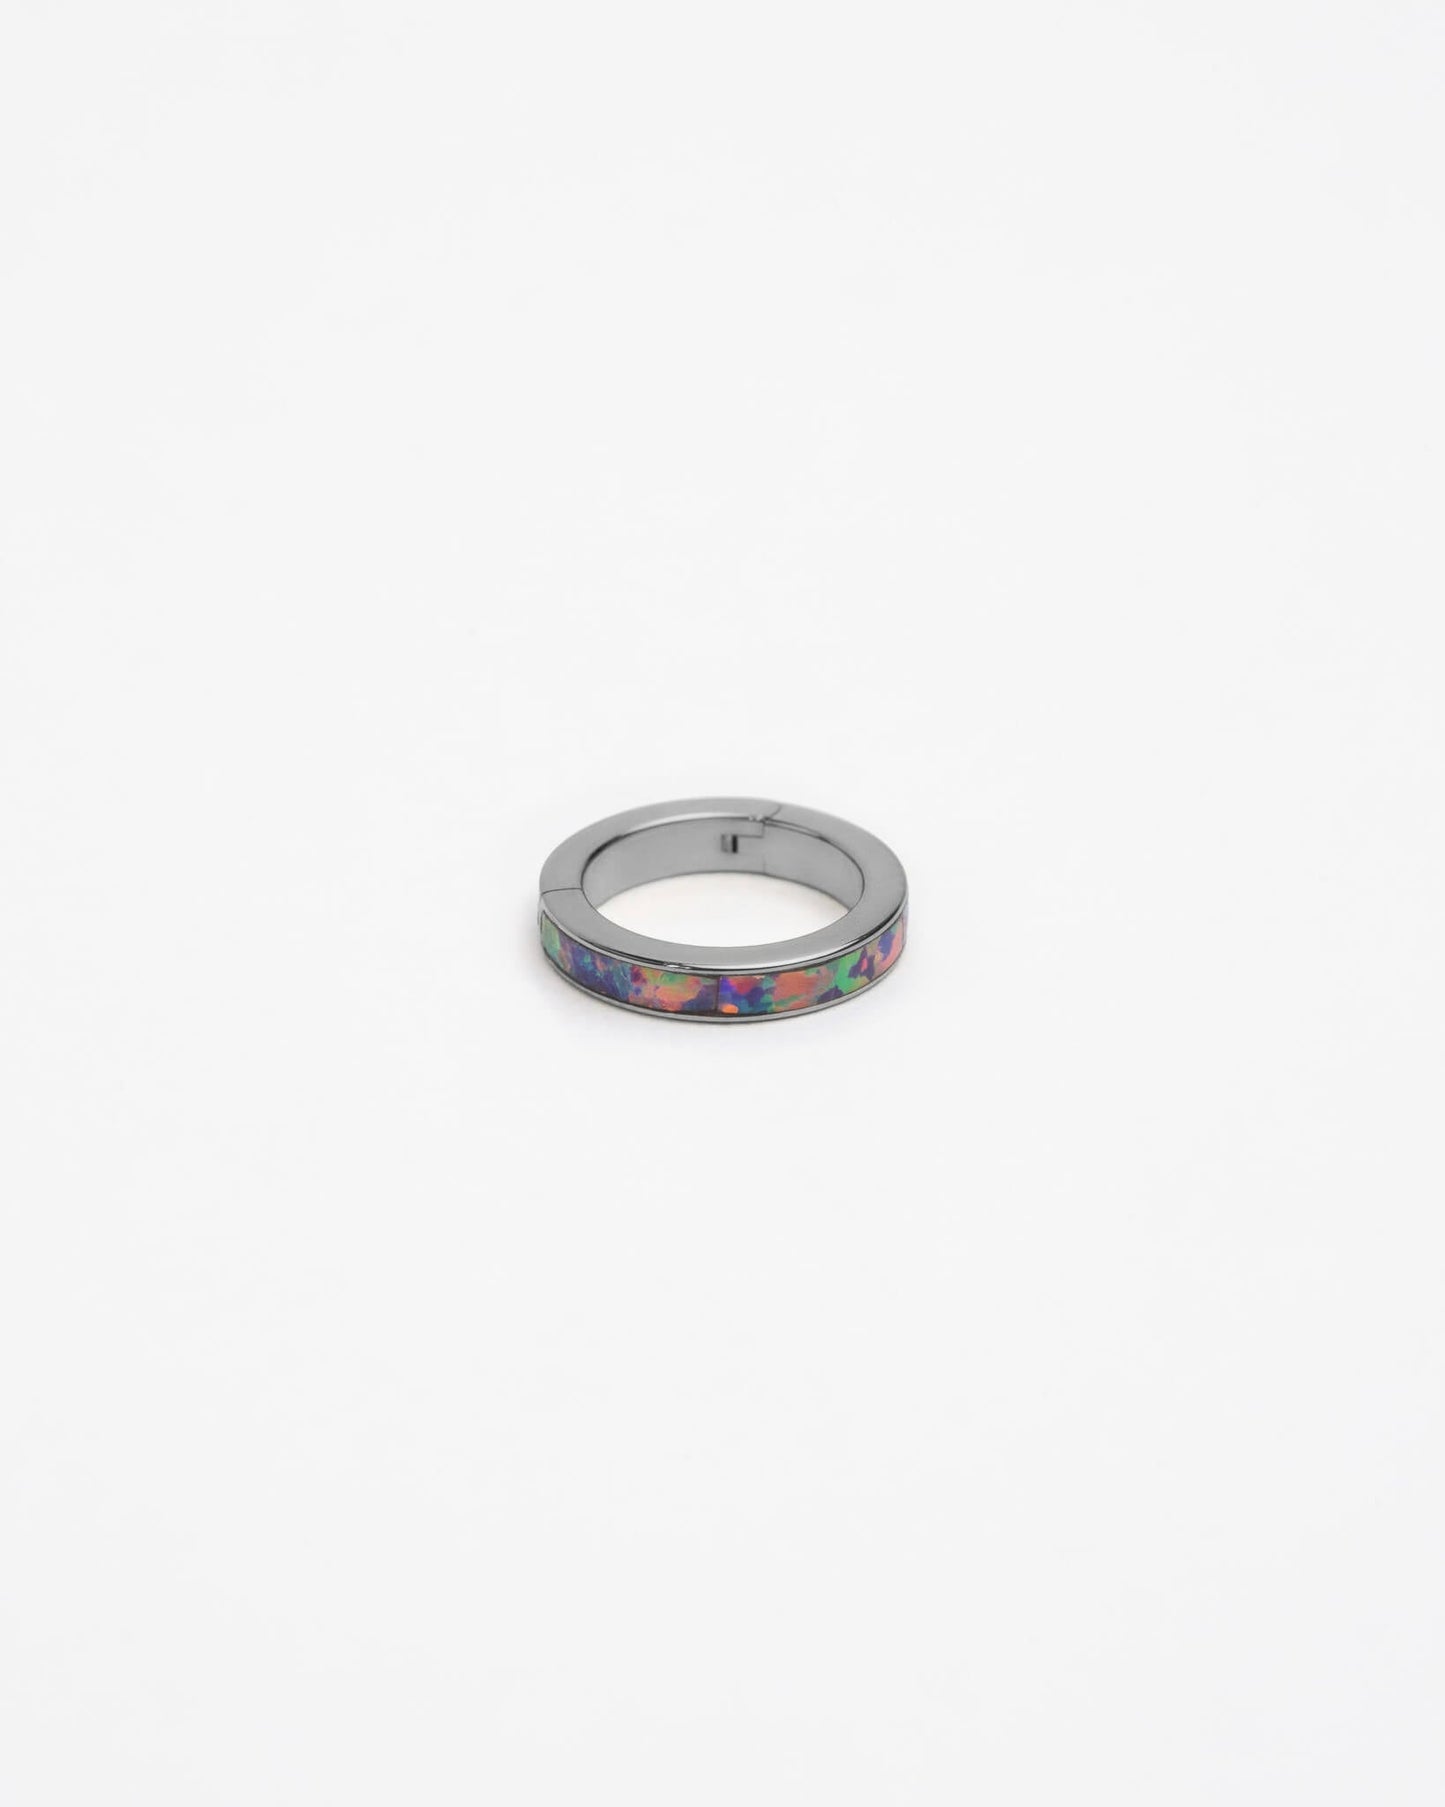 Opal Lobe Cuffs™ - Lobe Cuffs - Ask and Embla